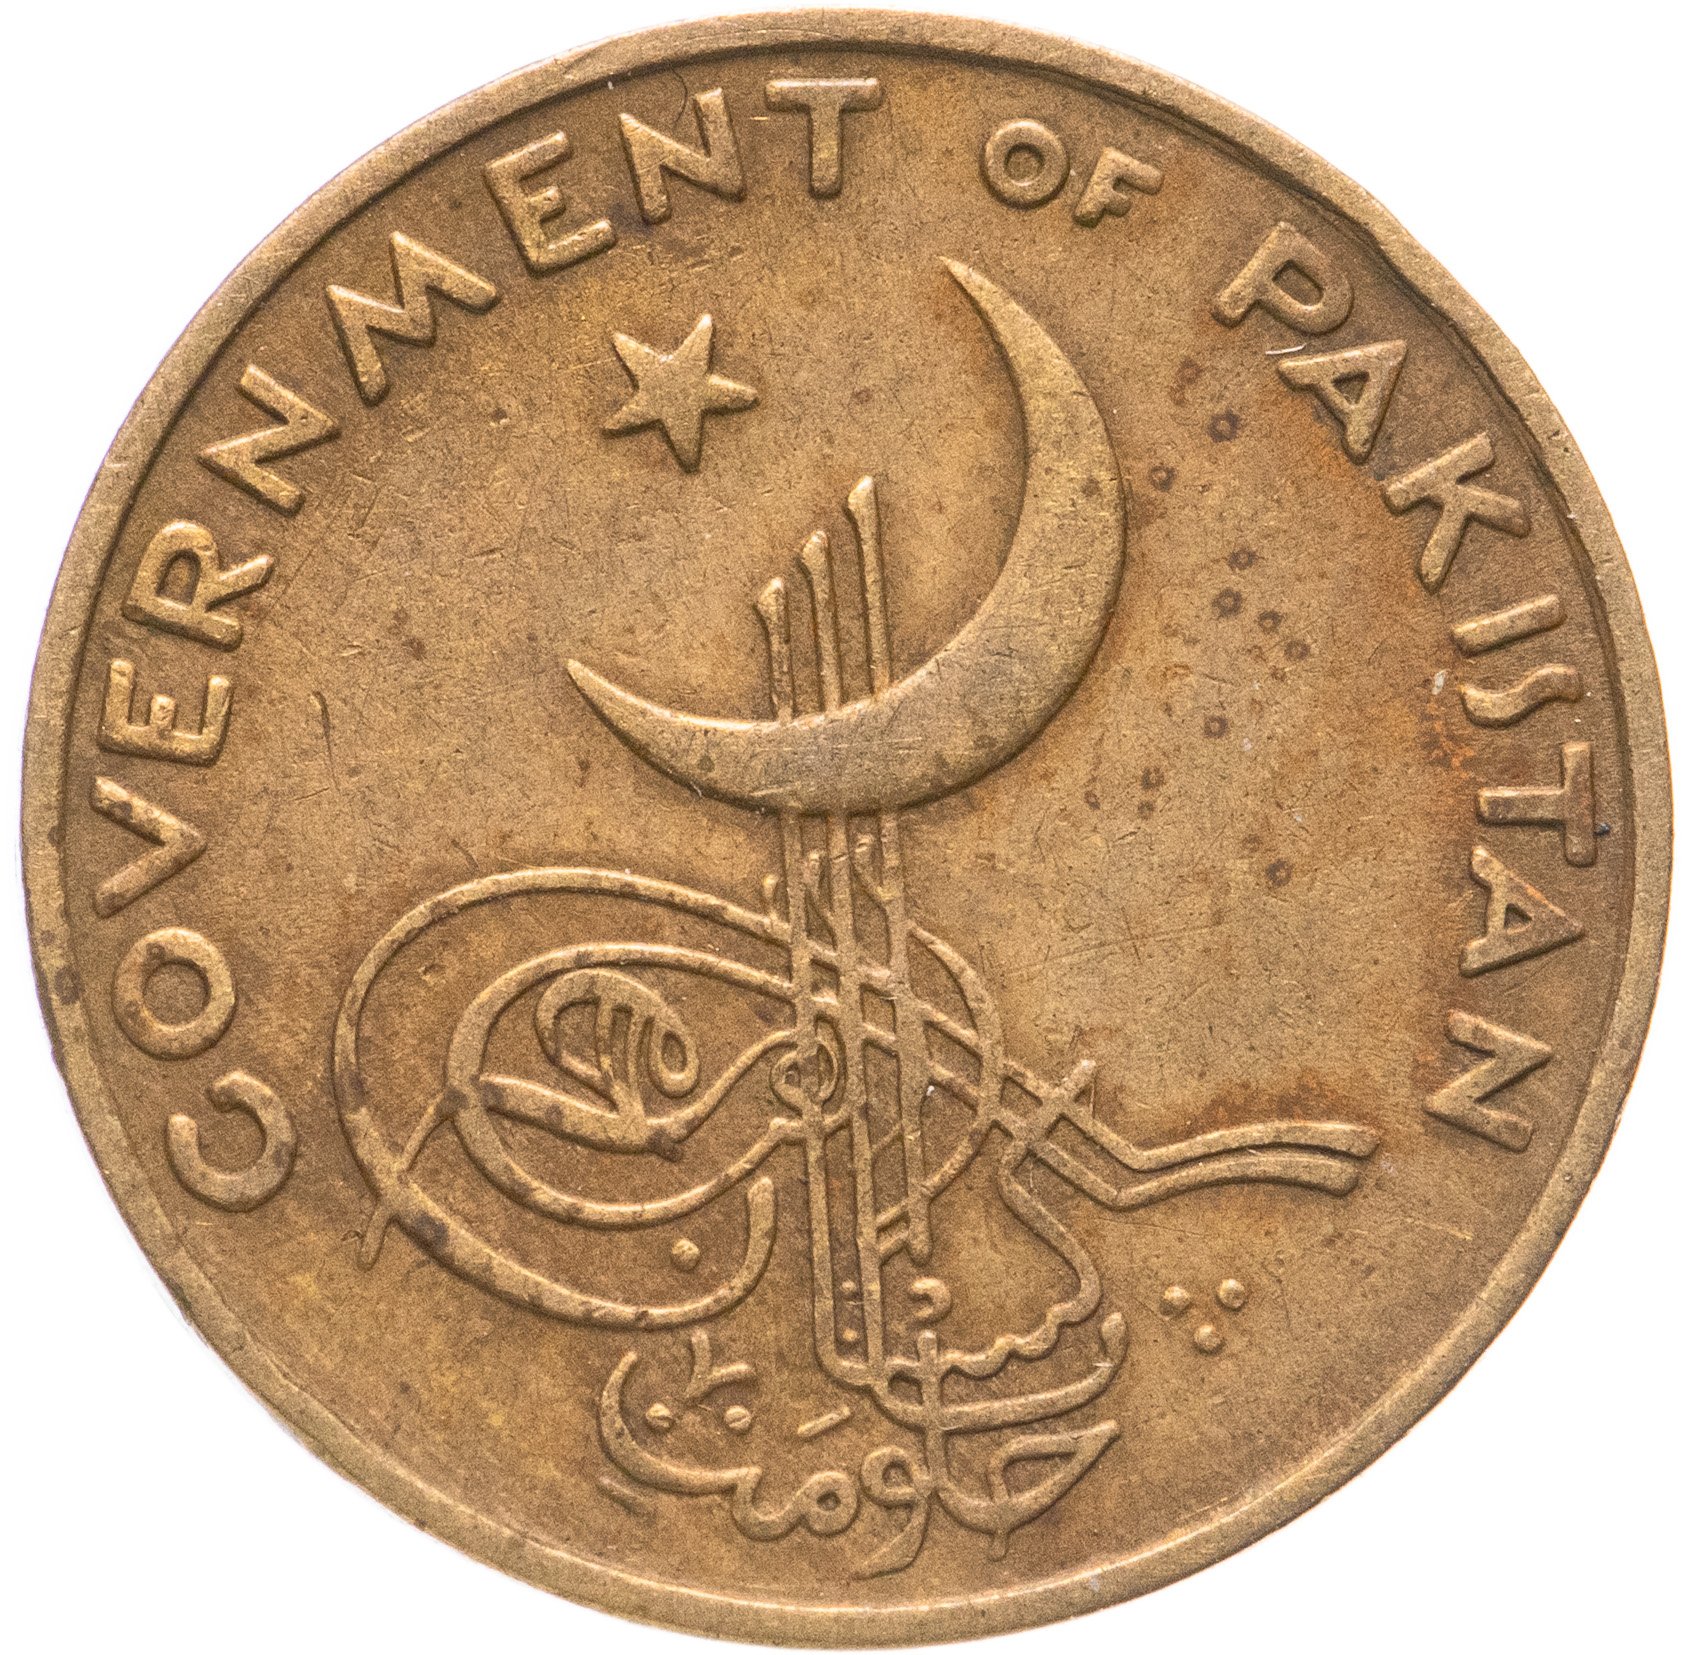 Монеты 1957 года. Монетка Пакистана 1. 1 Пайс Пакистан. 5 Пайс Пакистан 1/989 монета вайлдберриз. Пакистанские монеты монеты.